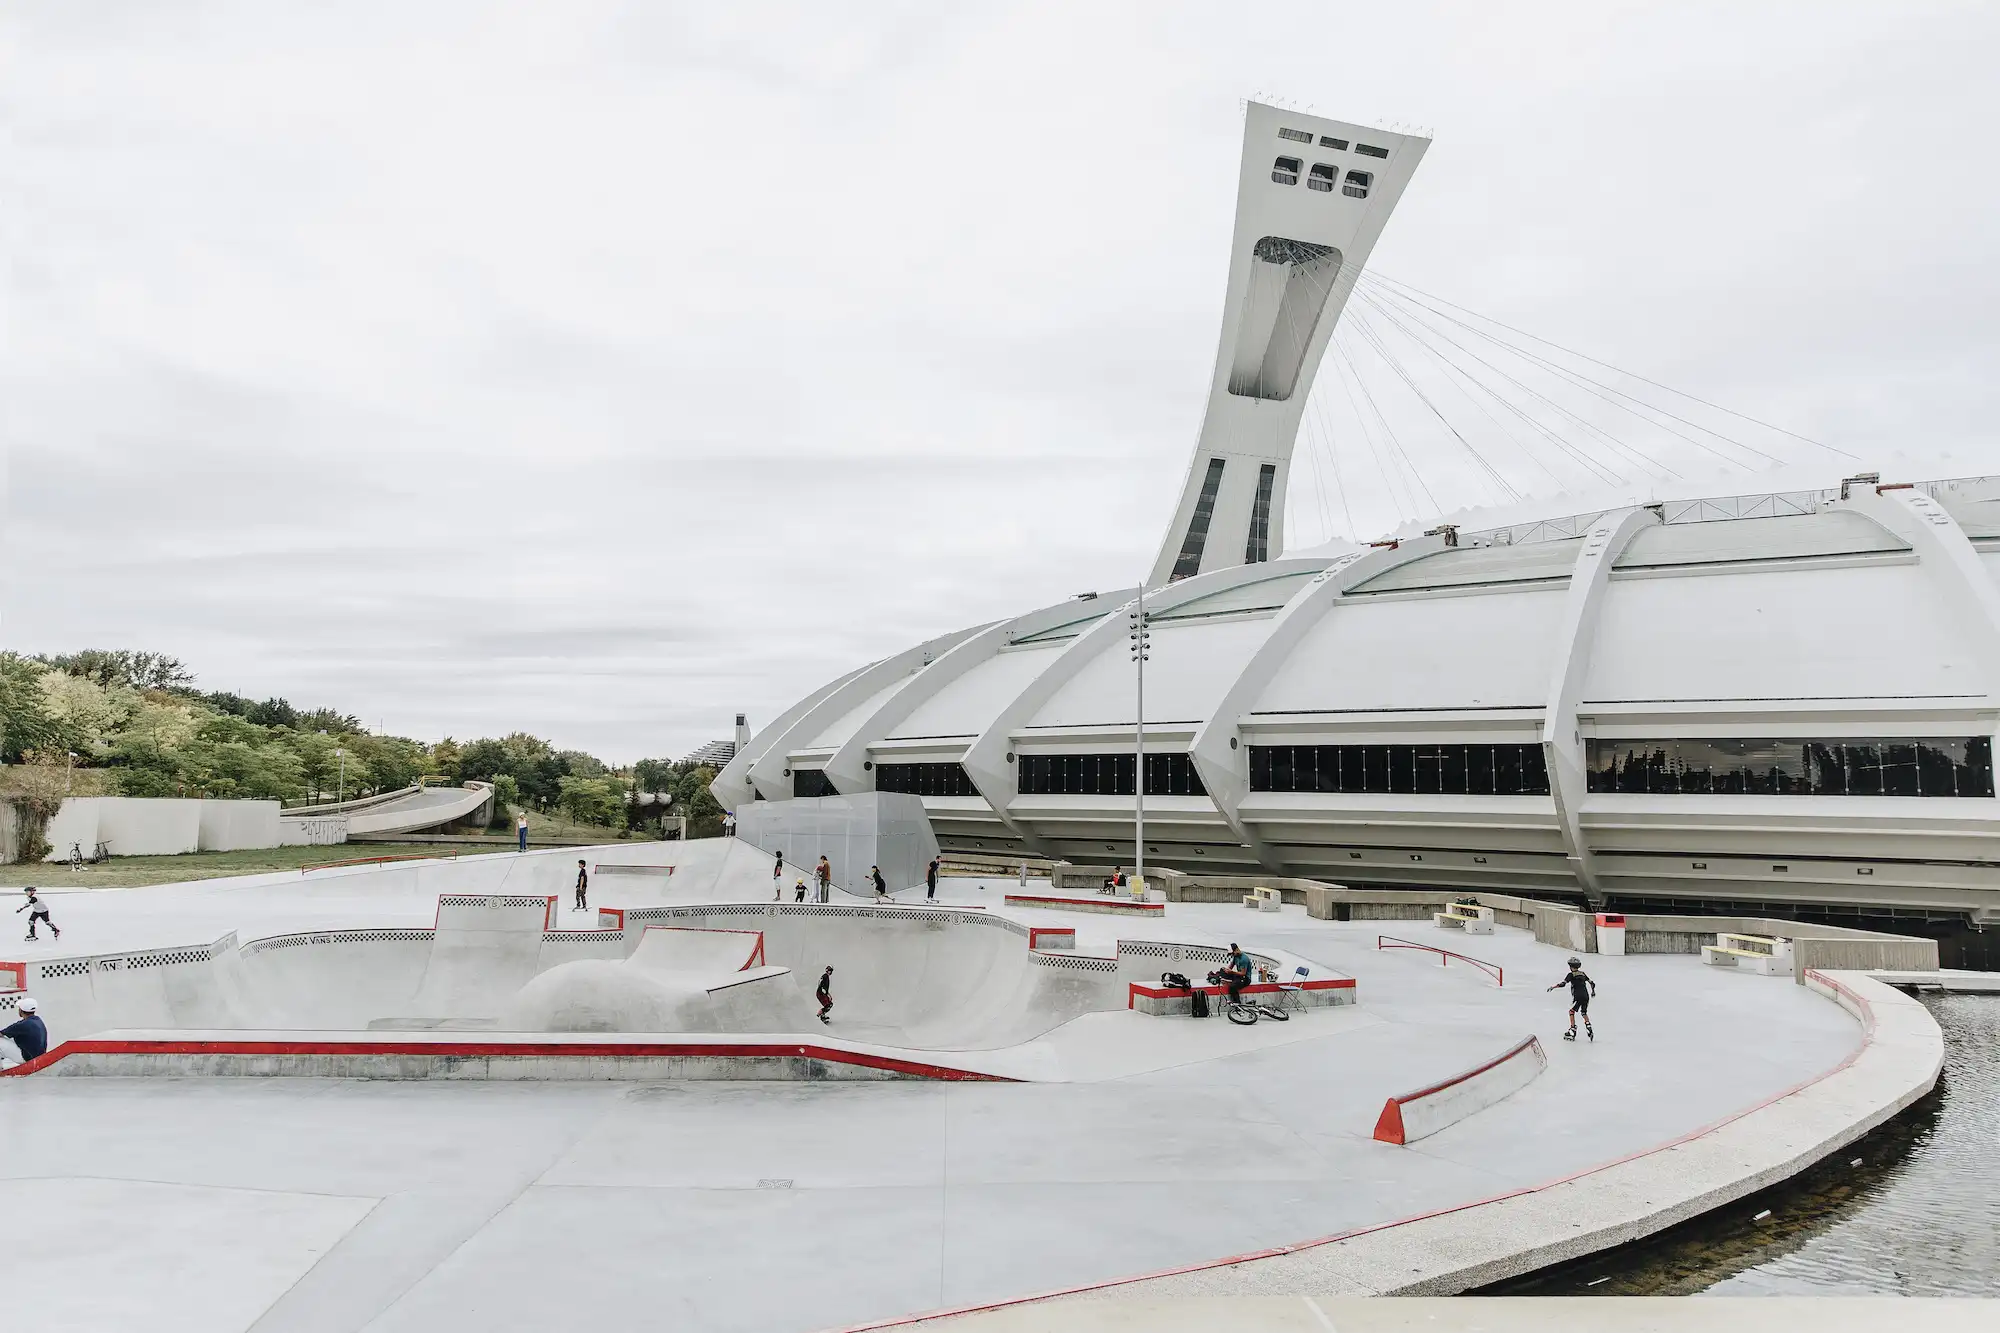 parc olympique skatepark.